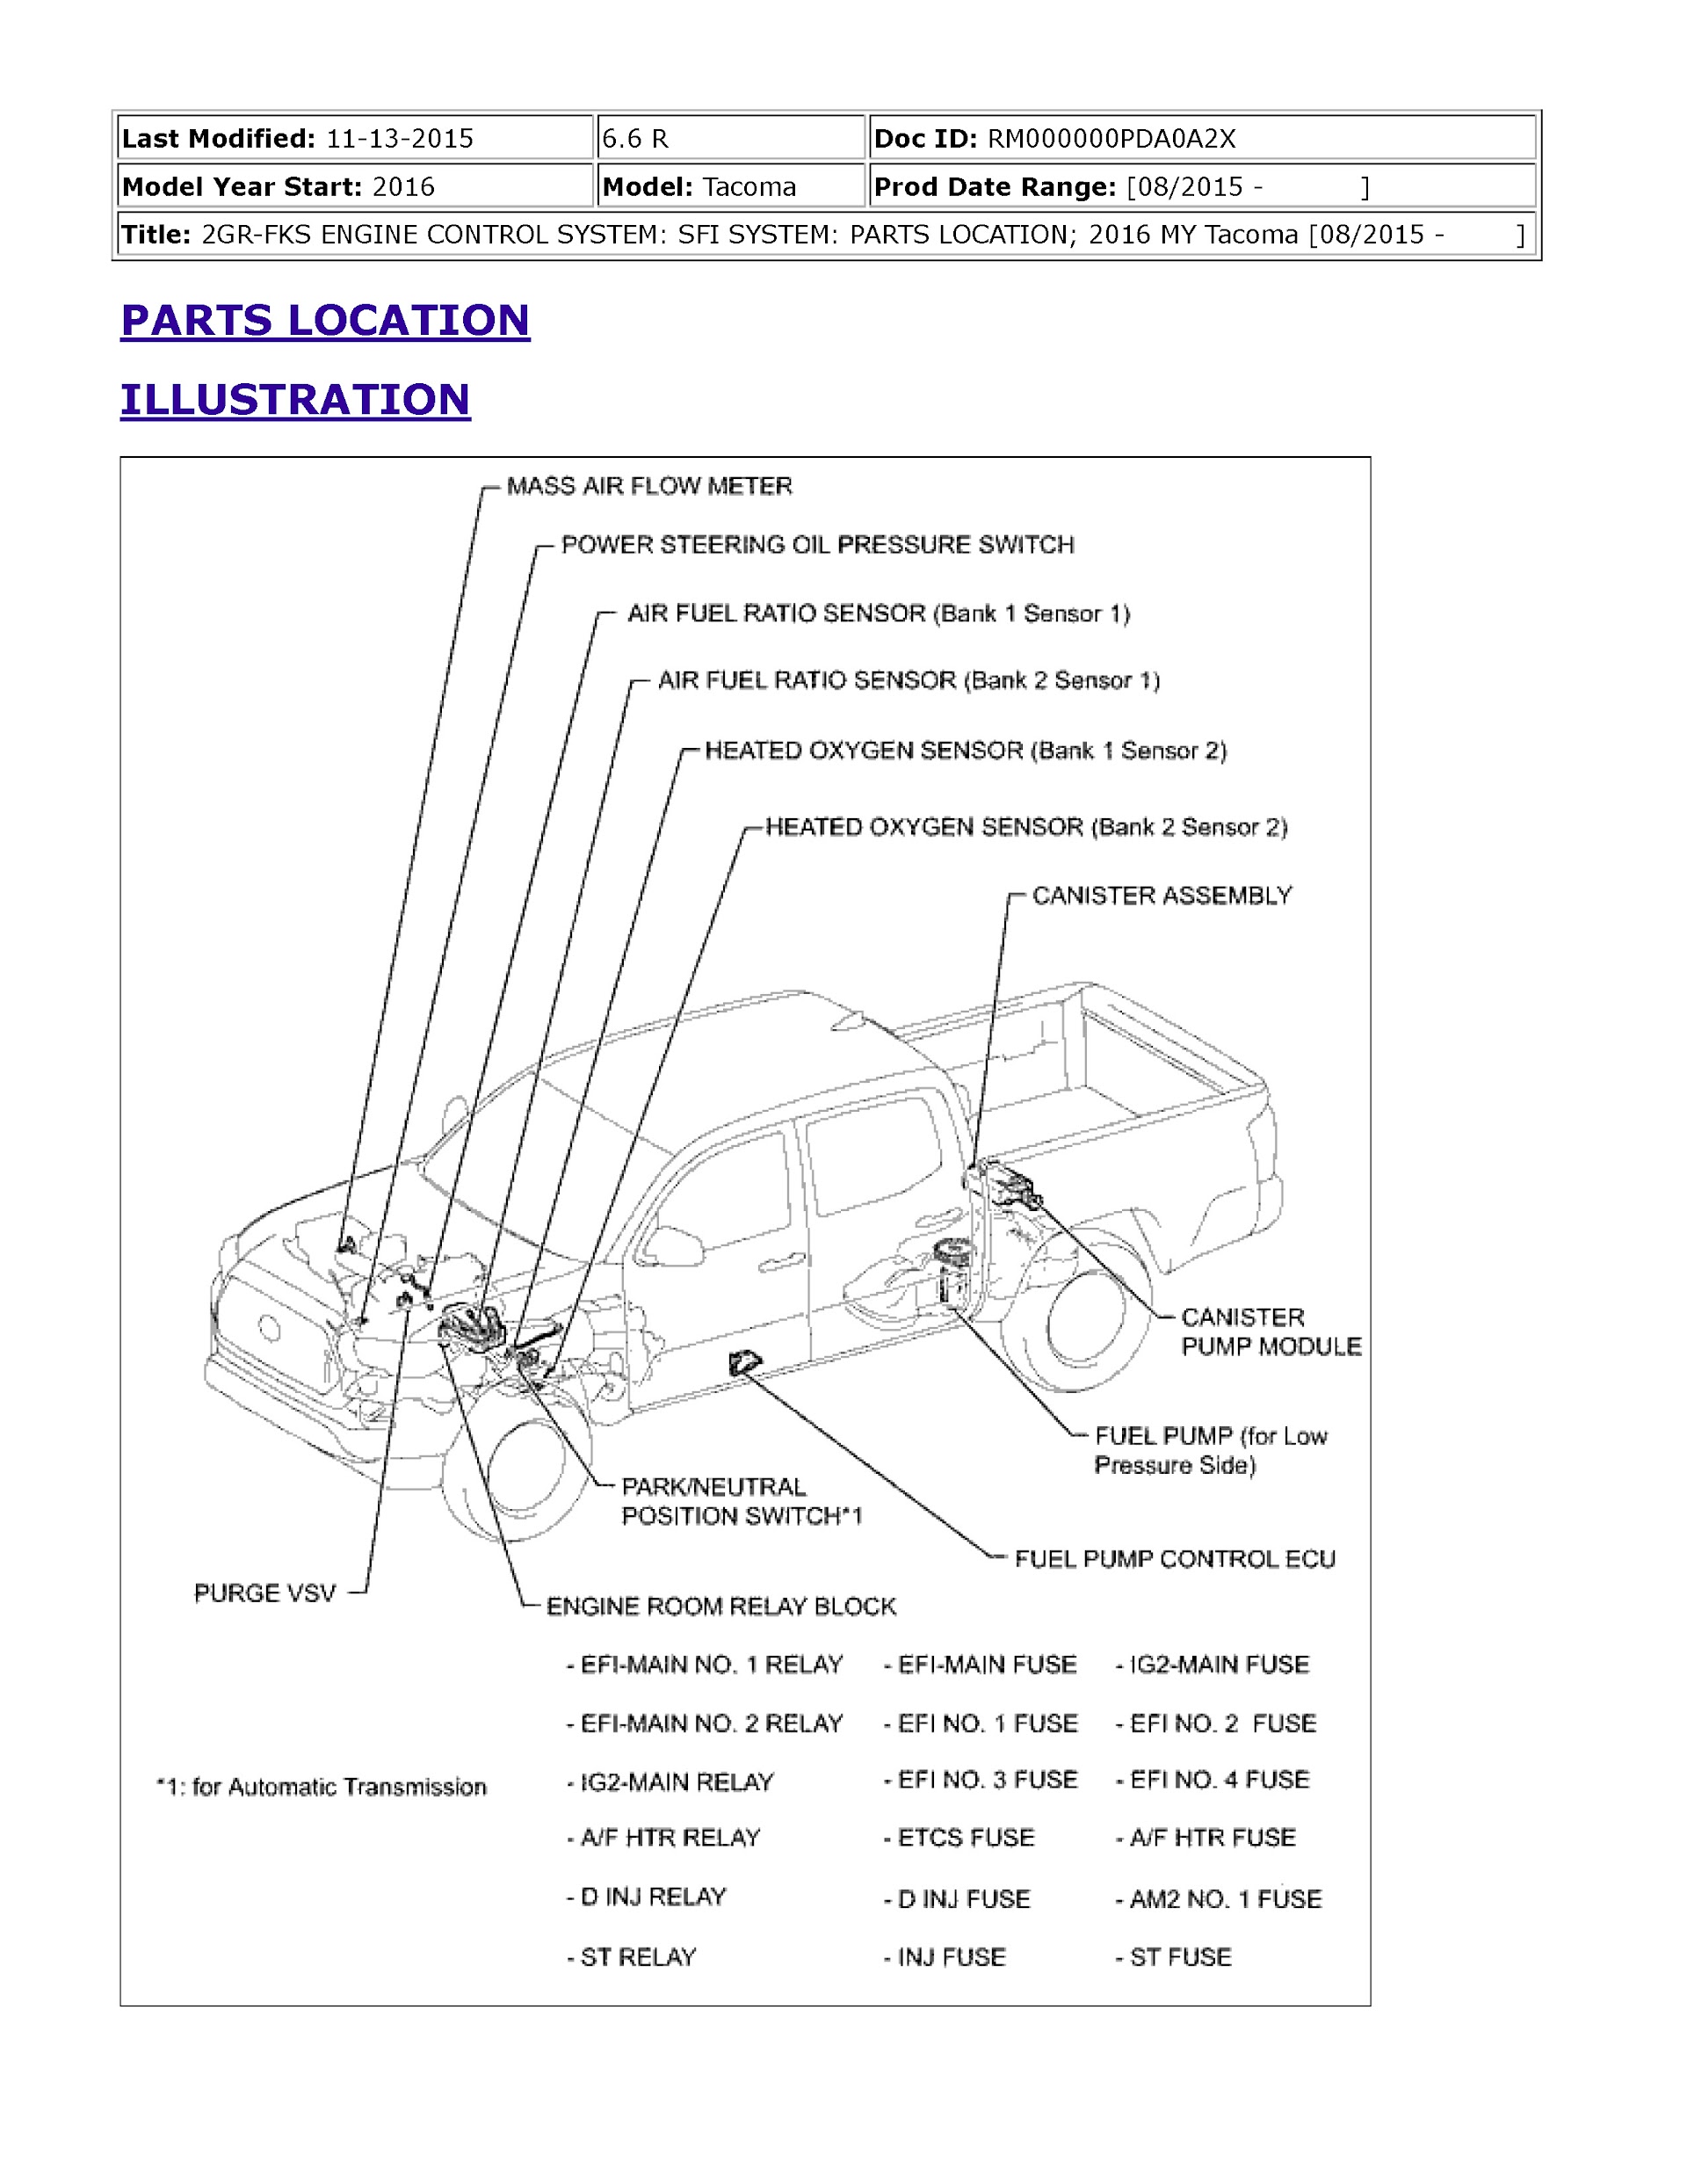 2018 Toyota Tacoma Repair Manual, 2GR-FKS Engine Control